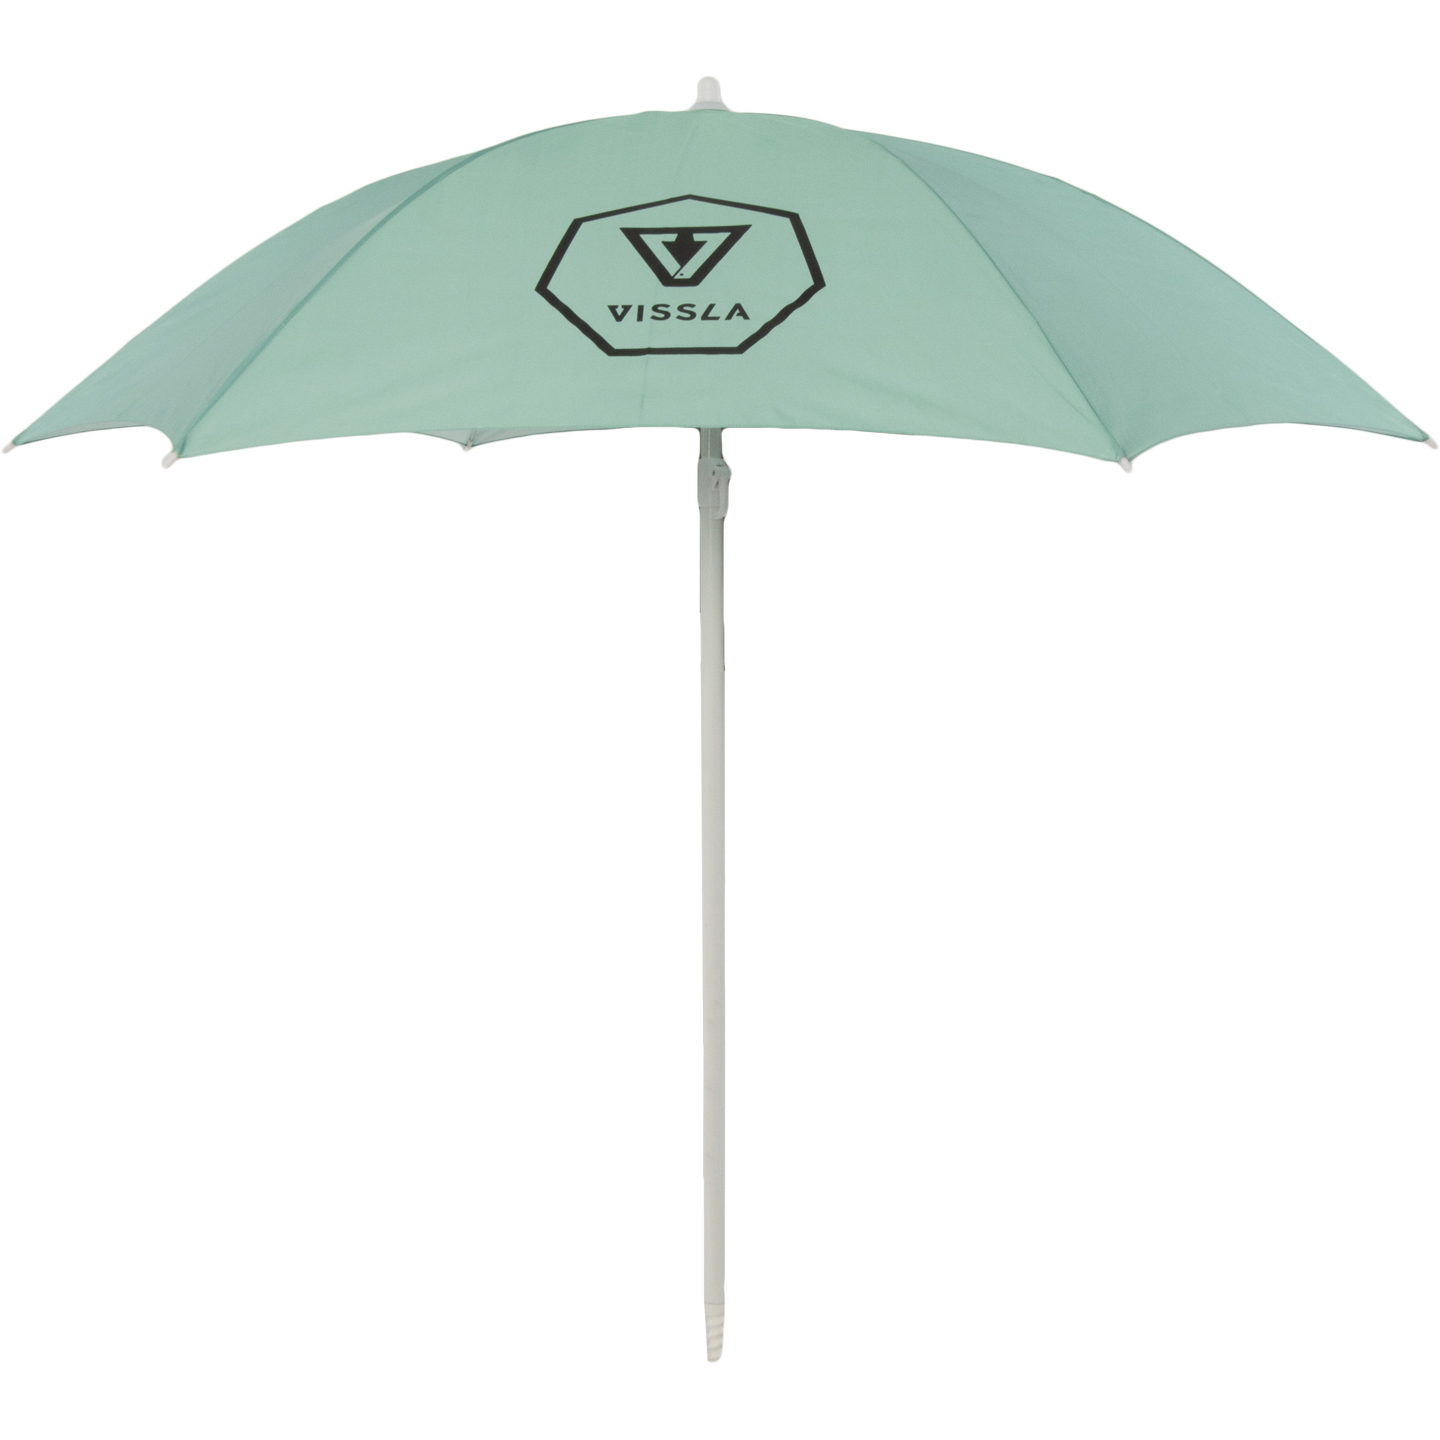 Vissla - Beach Umbrella - Jade